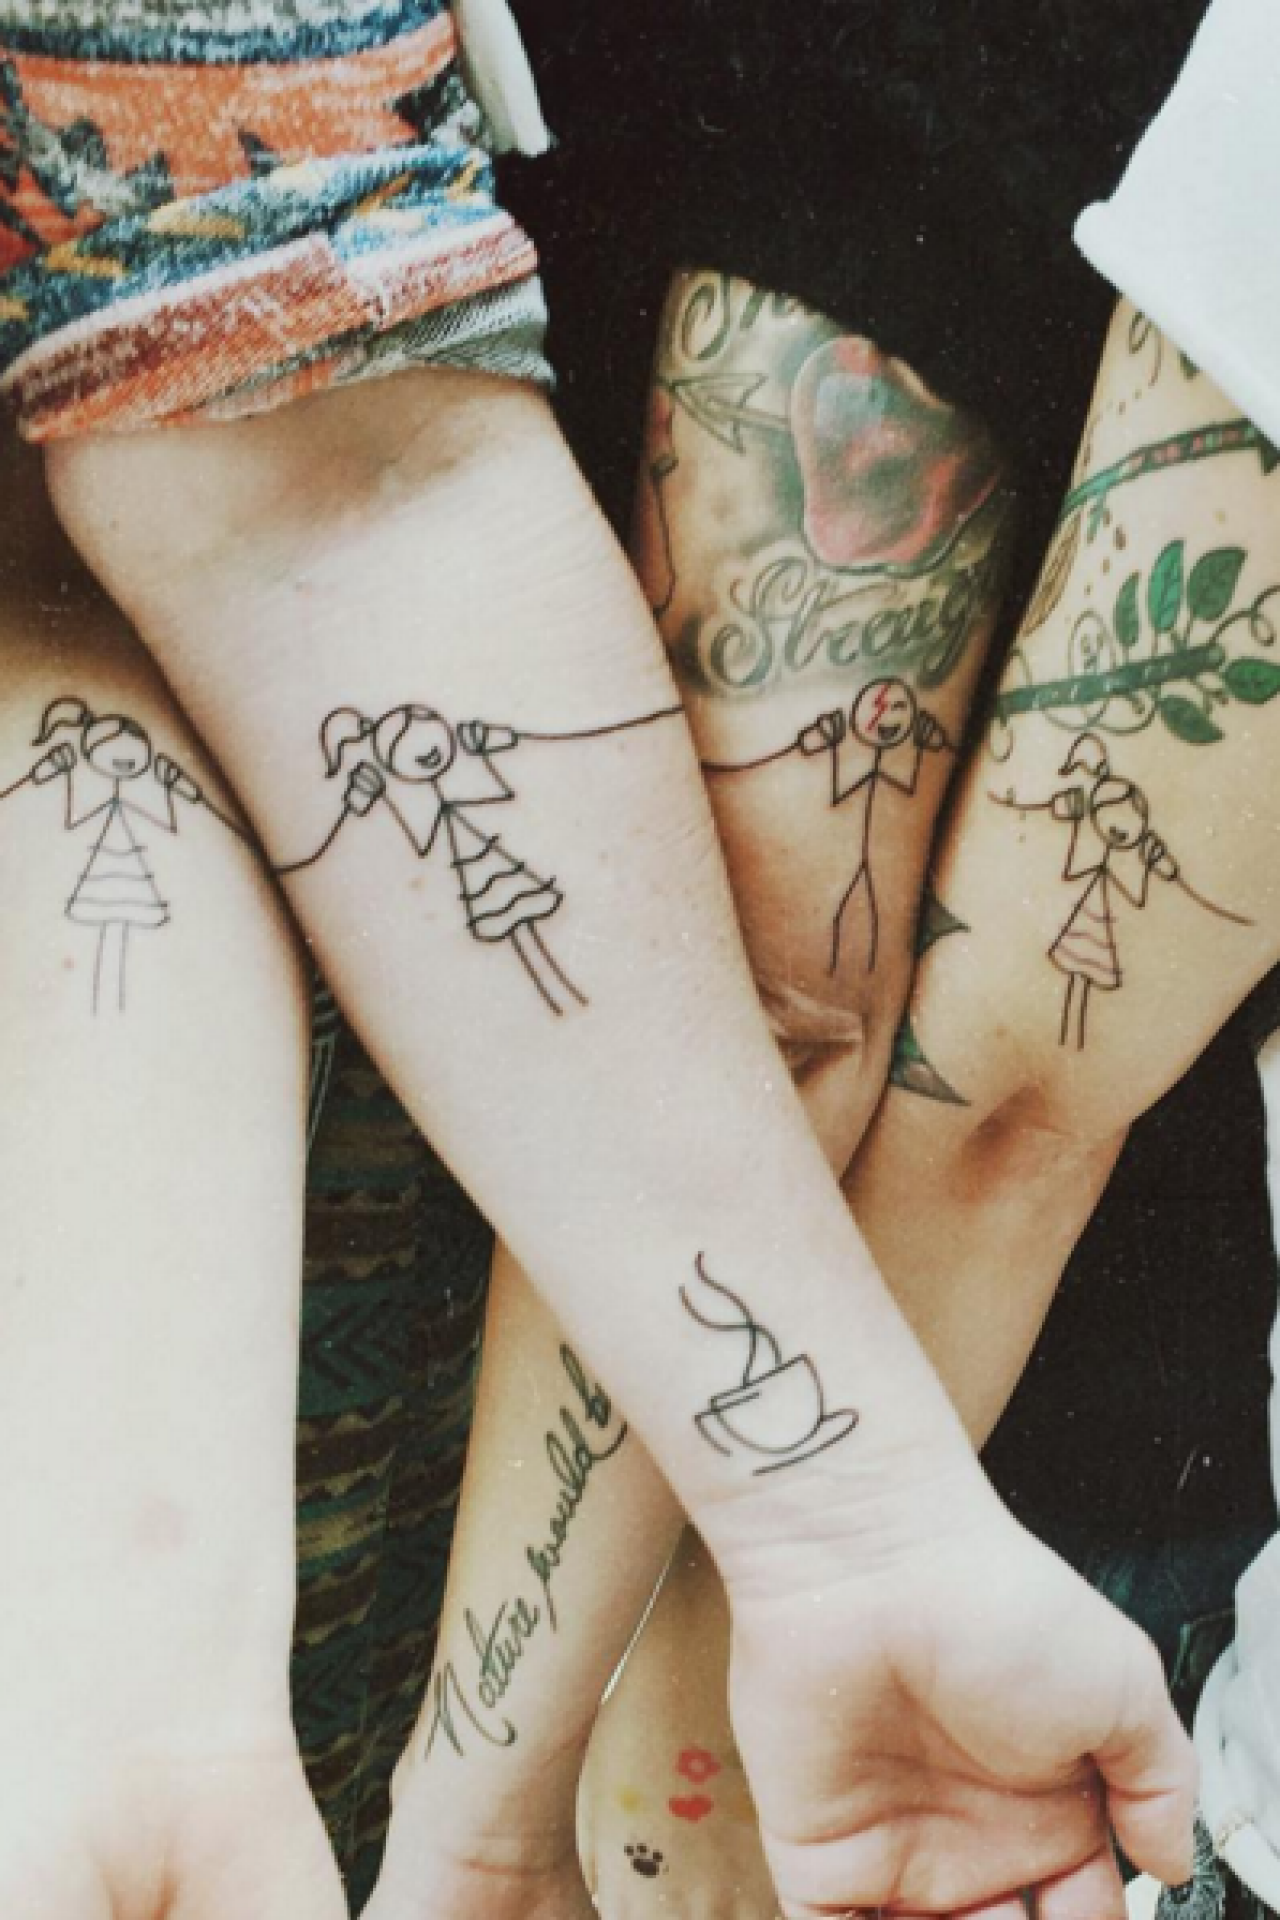 Tattoo uploaded by Bahadır Cem Börekcioğlu • Sisters (Right one is healed)  Instagram: @karincatattoo #karincatattoo #sparrow #healed #bird #geometric # leg #sisters #sistertattoos #sister #couple #tattoo #tattoos #tattoodesign  #tattooartist #tattooer ...